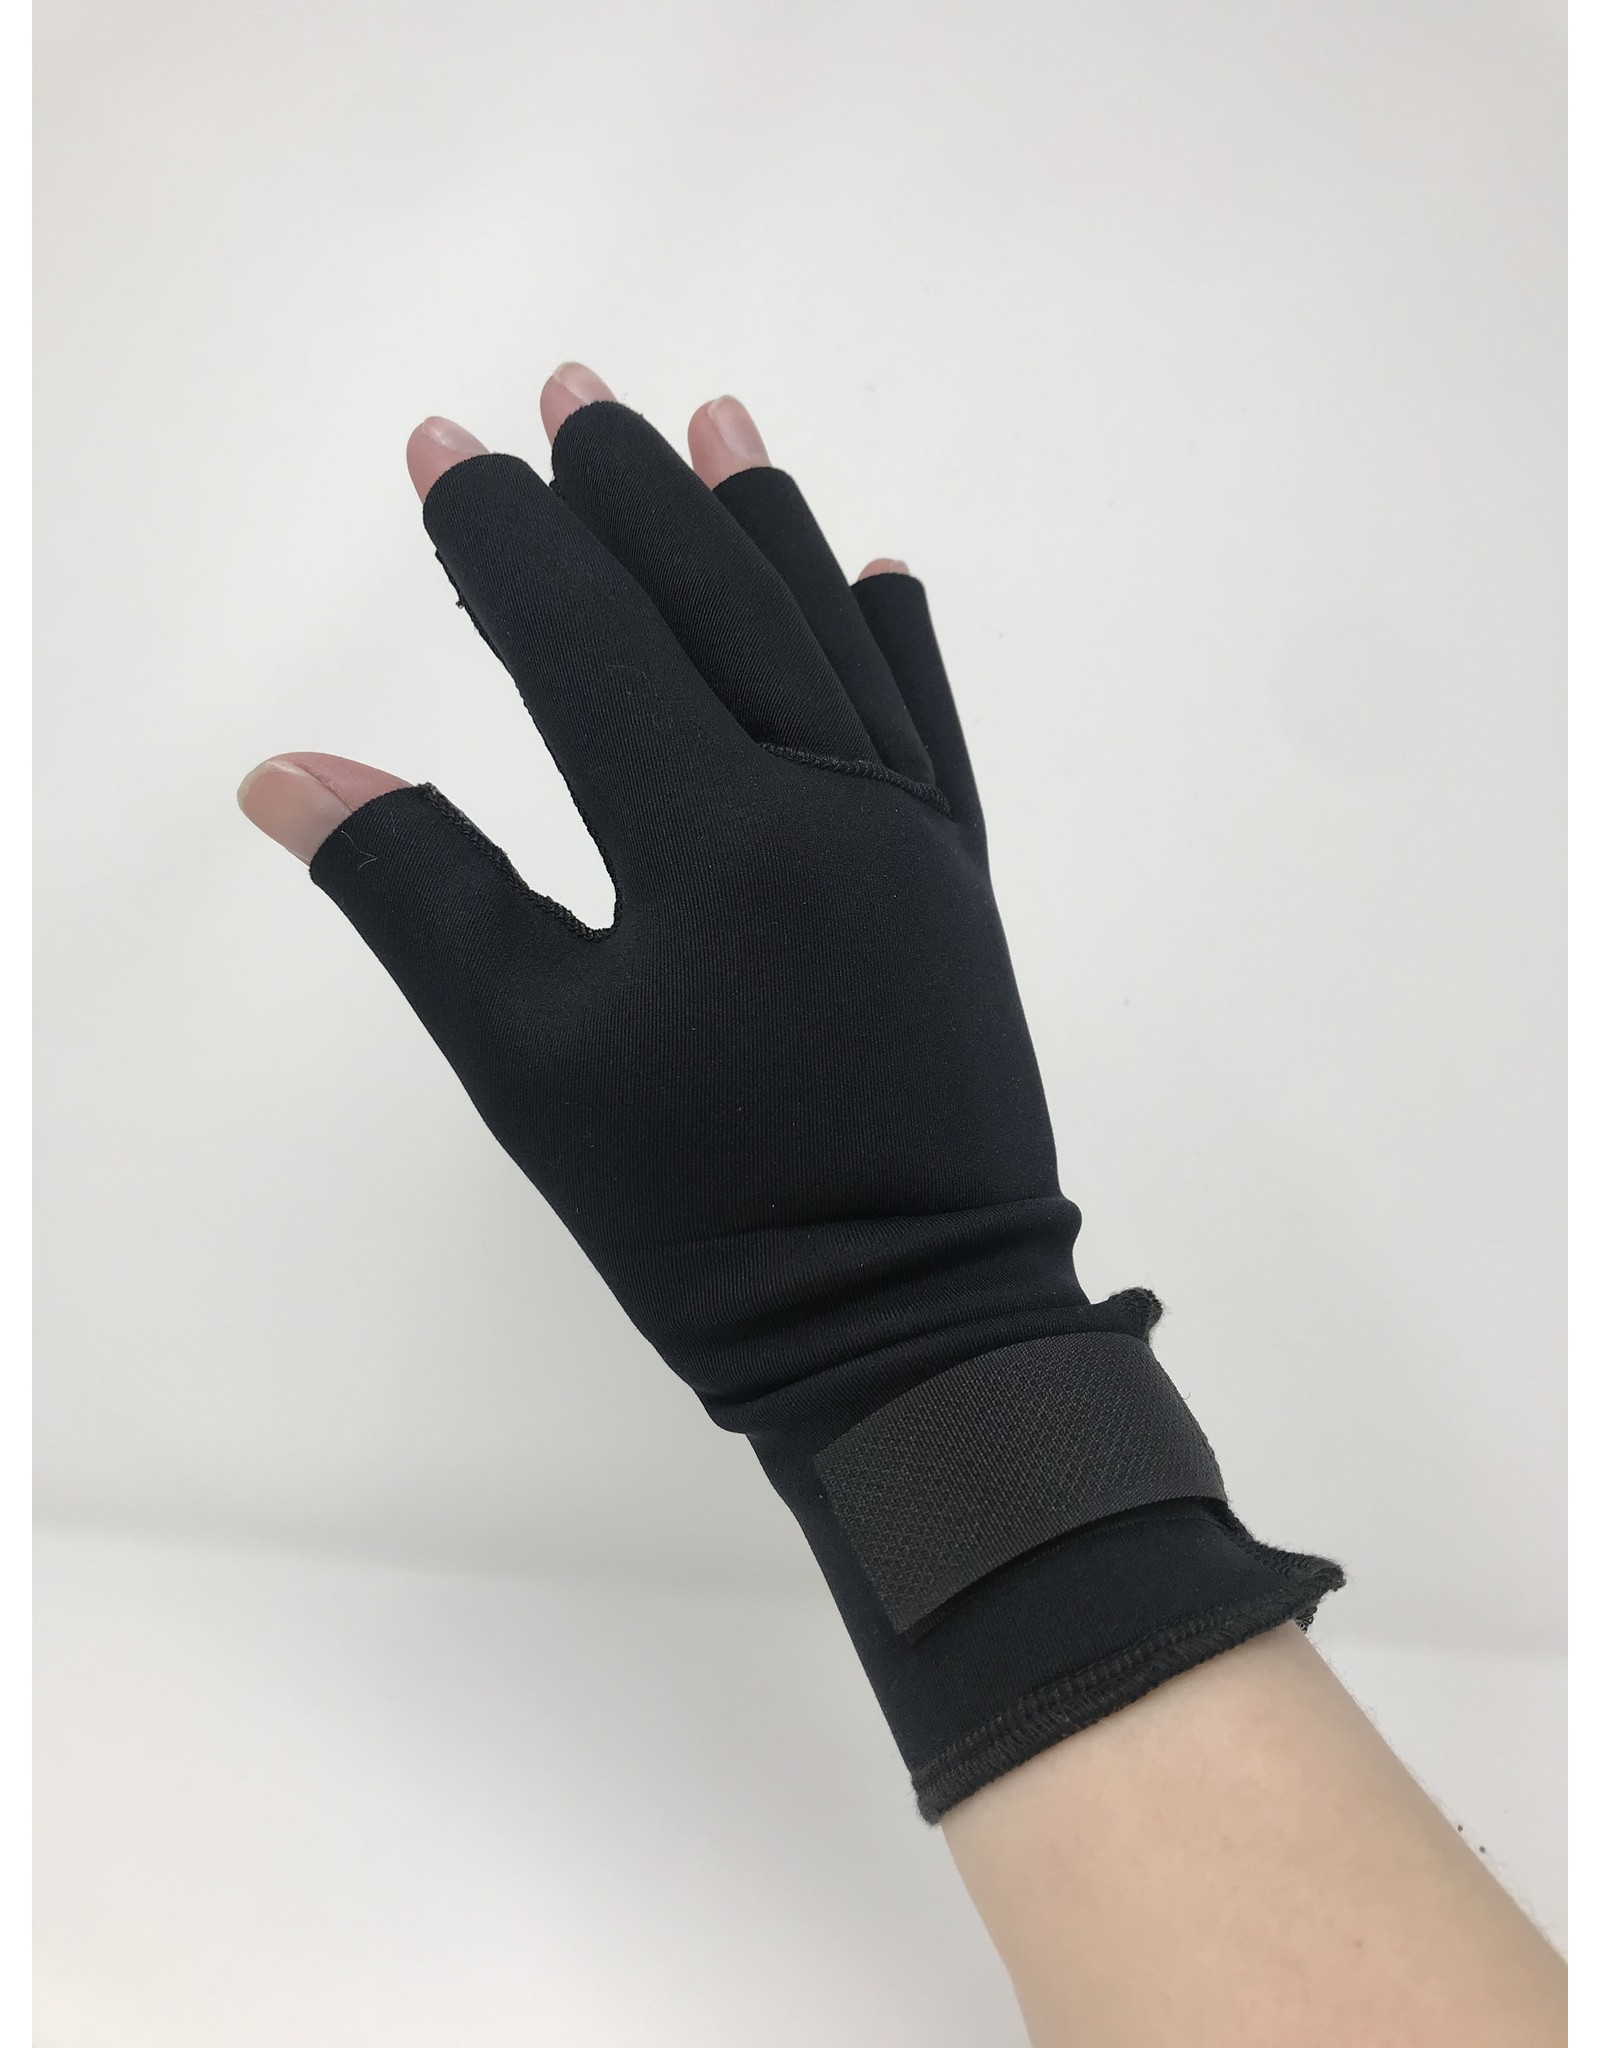 Swede-O Thermal Arthritis Gloves - Adaptive Technologies Inc